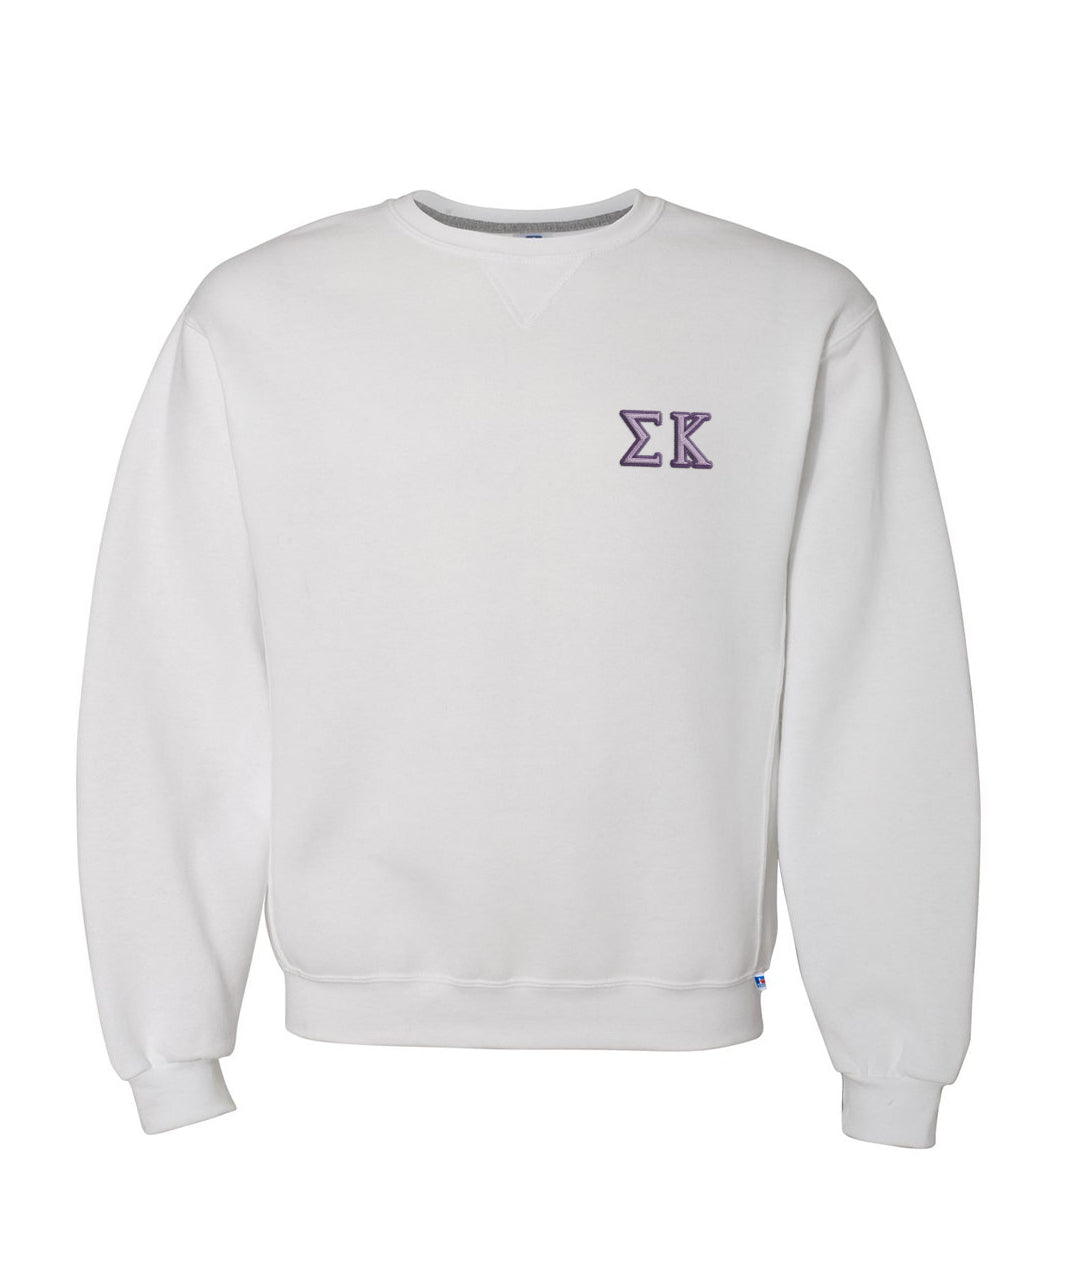 Sigma Kappa Embroidered Crewneck Sweatshirt